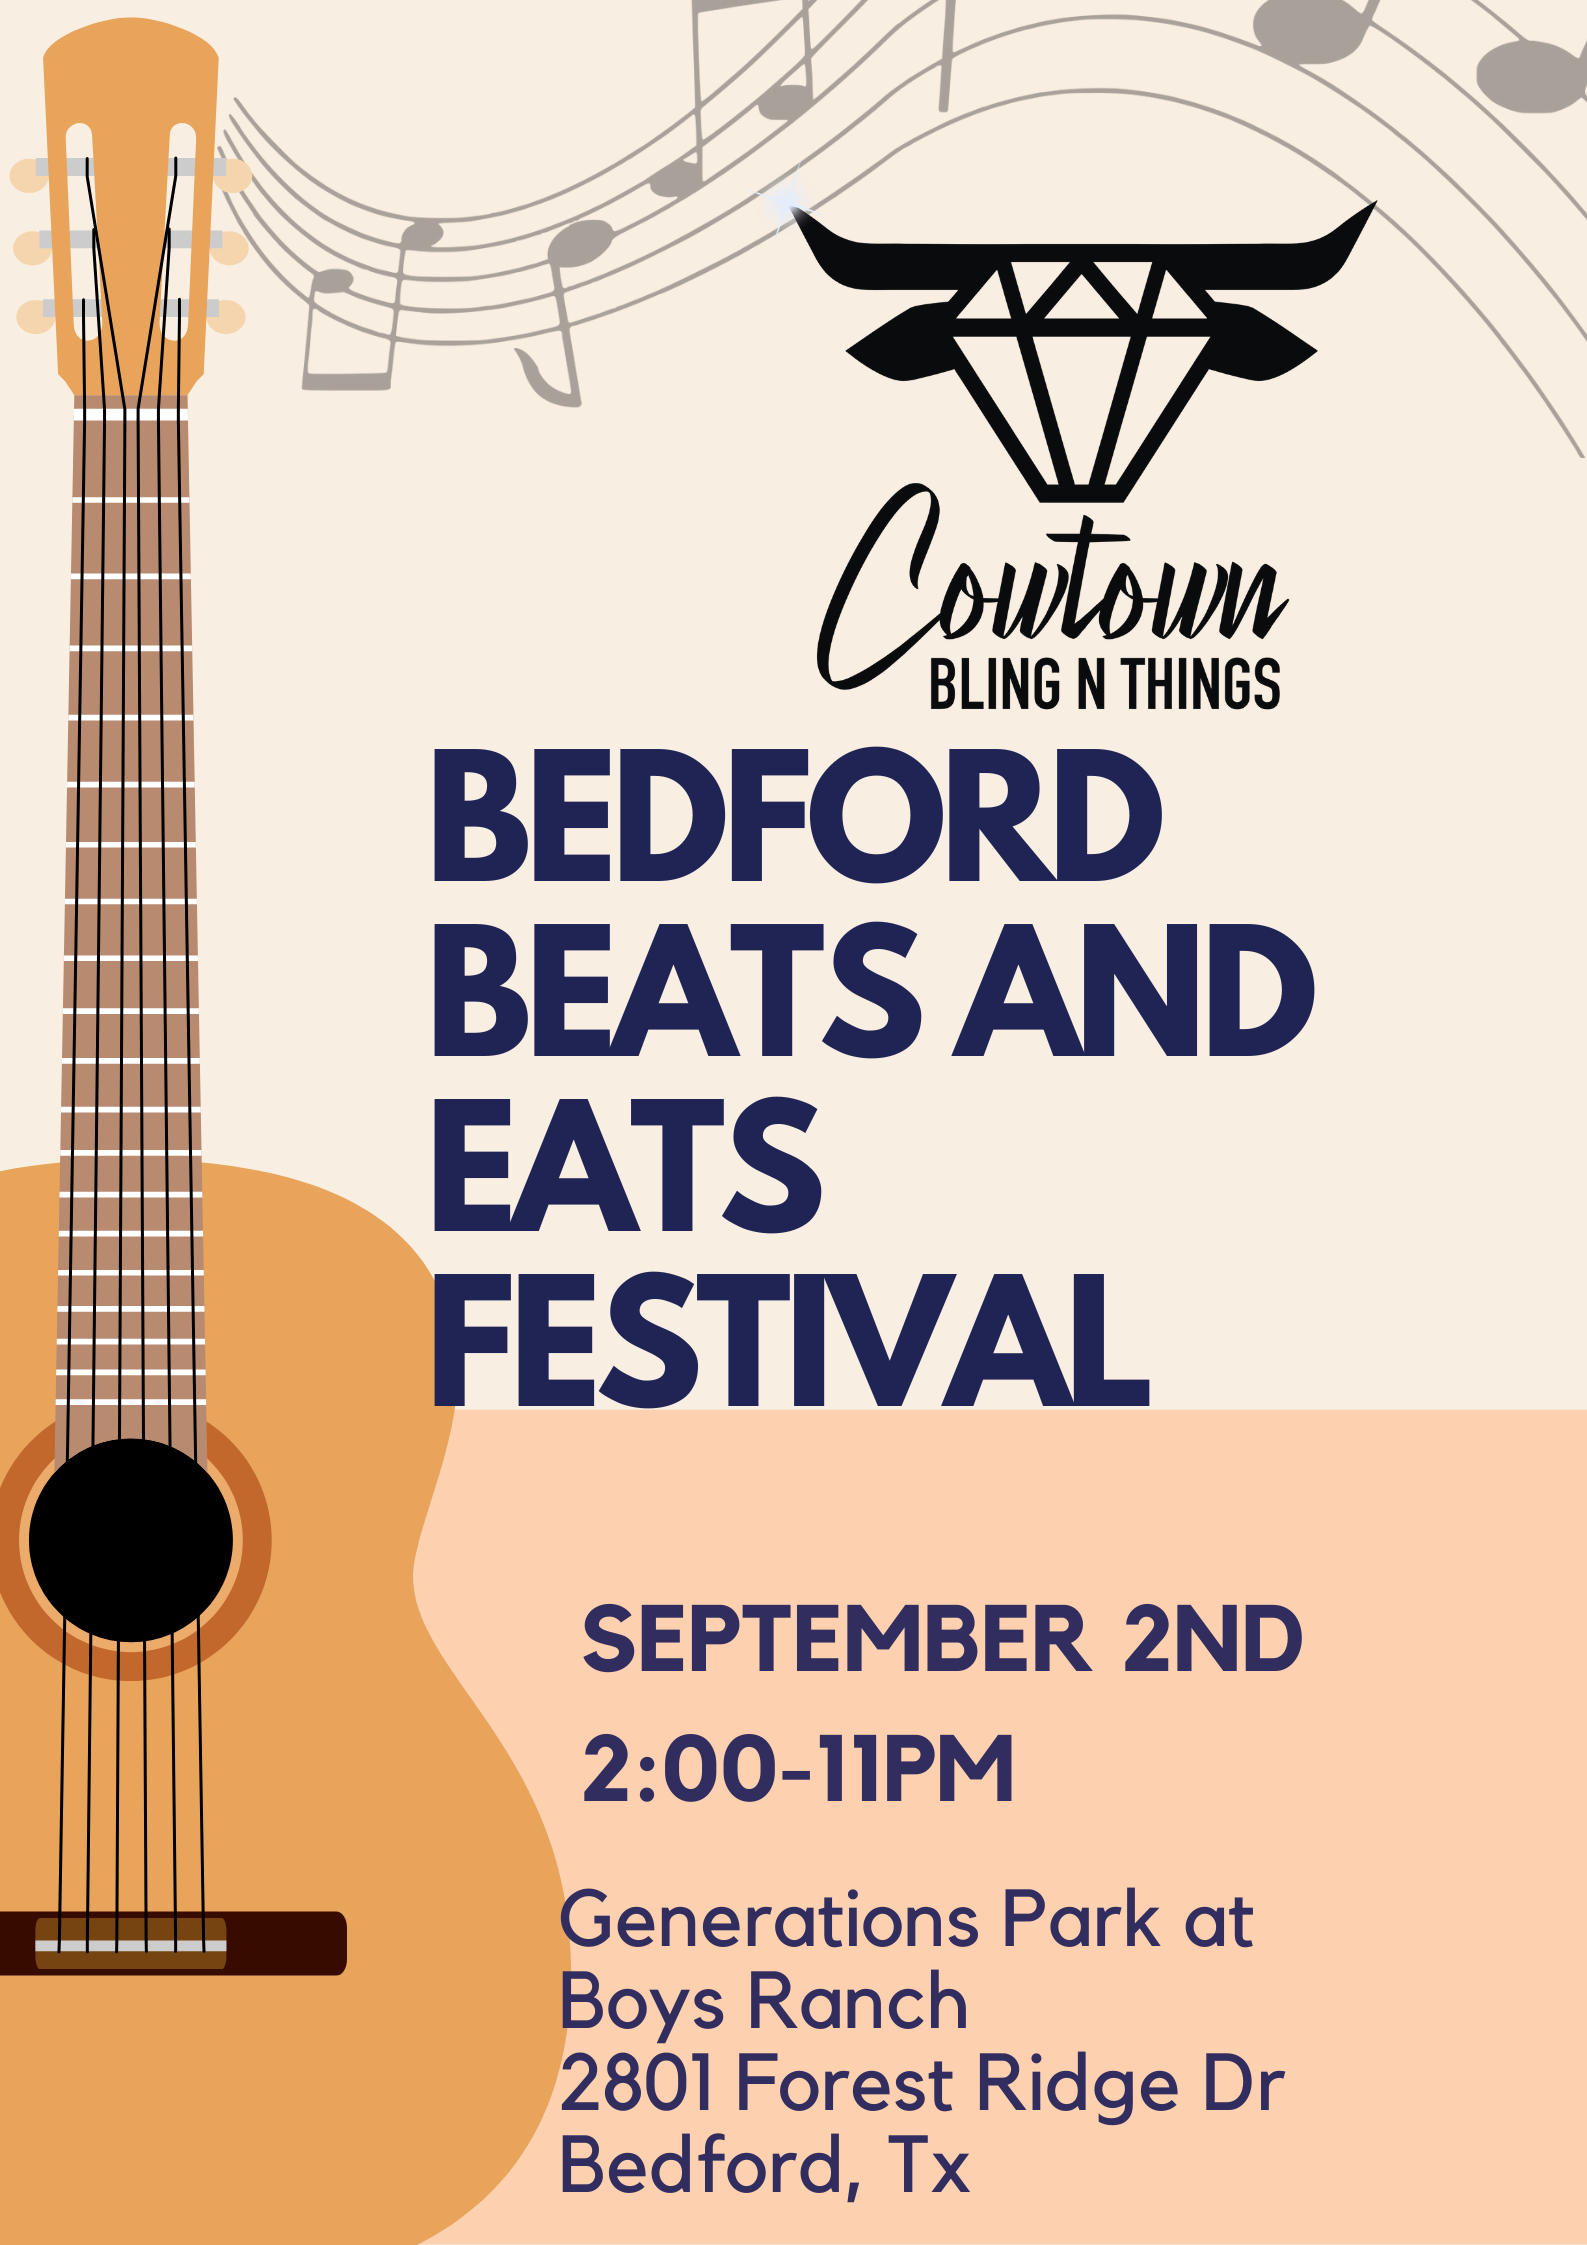 Bedford Beats and Eats Festival